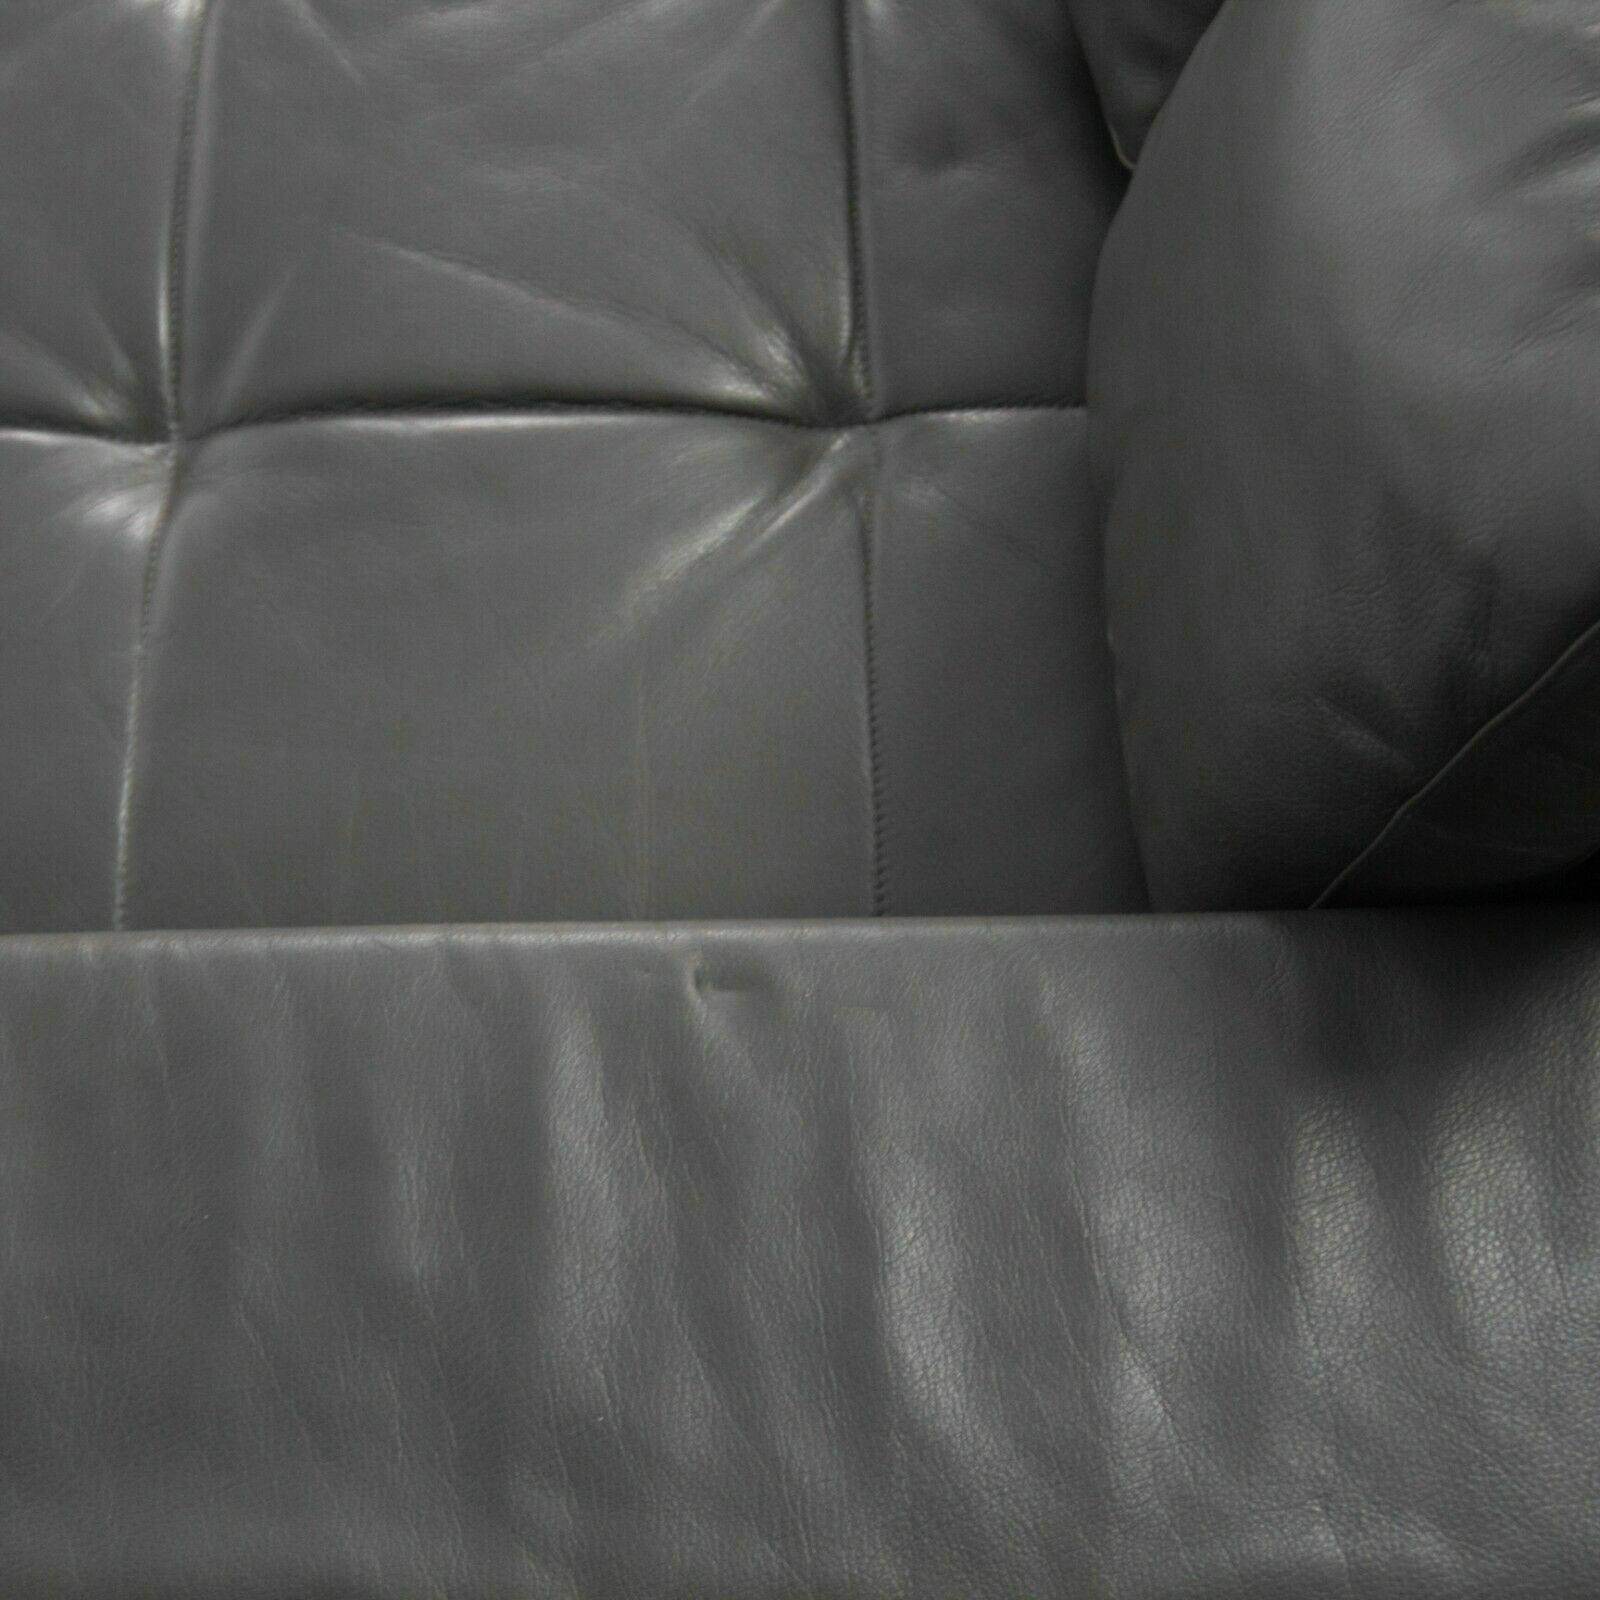 1999 Zanotta Alfa Grey Leather Sectional Modular Sofa by Emaf Progetti 2x Avail For Sale 3